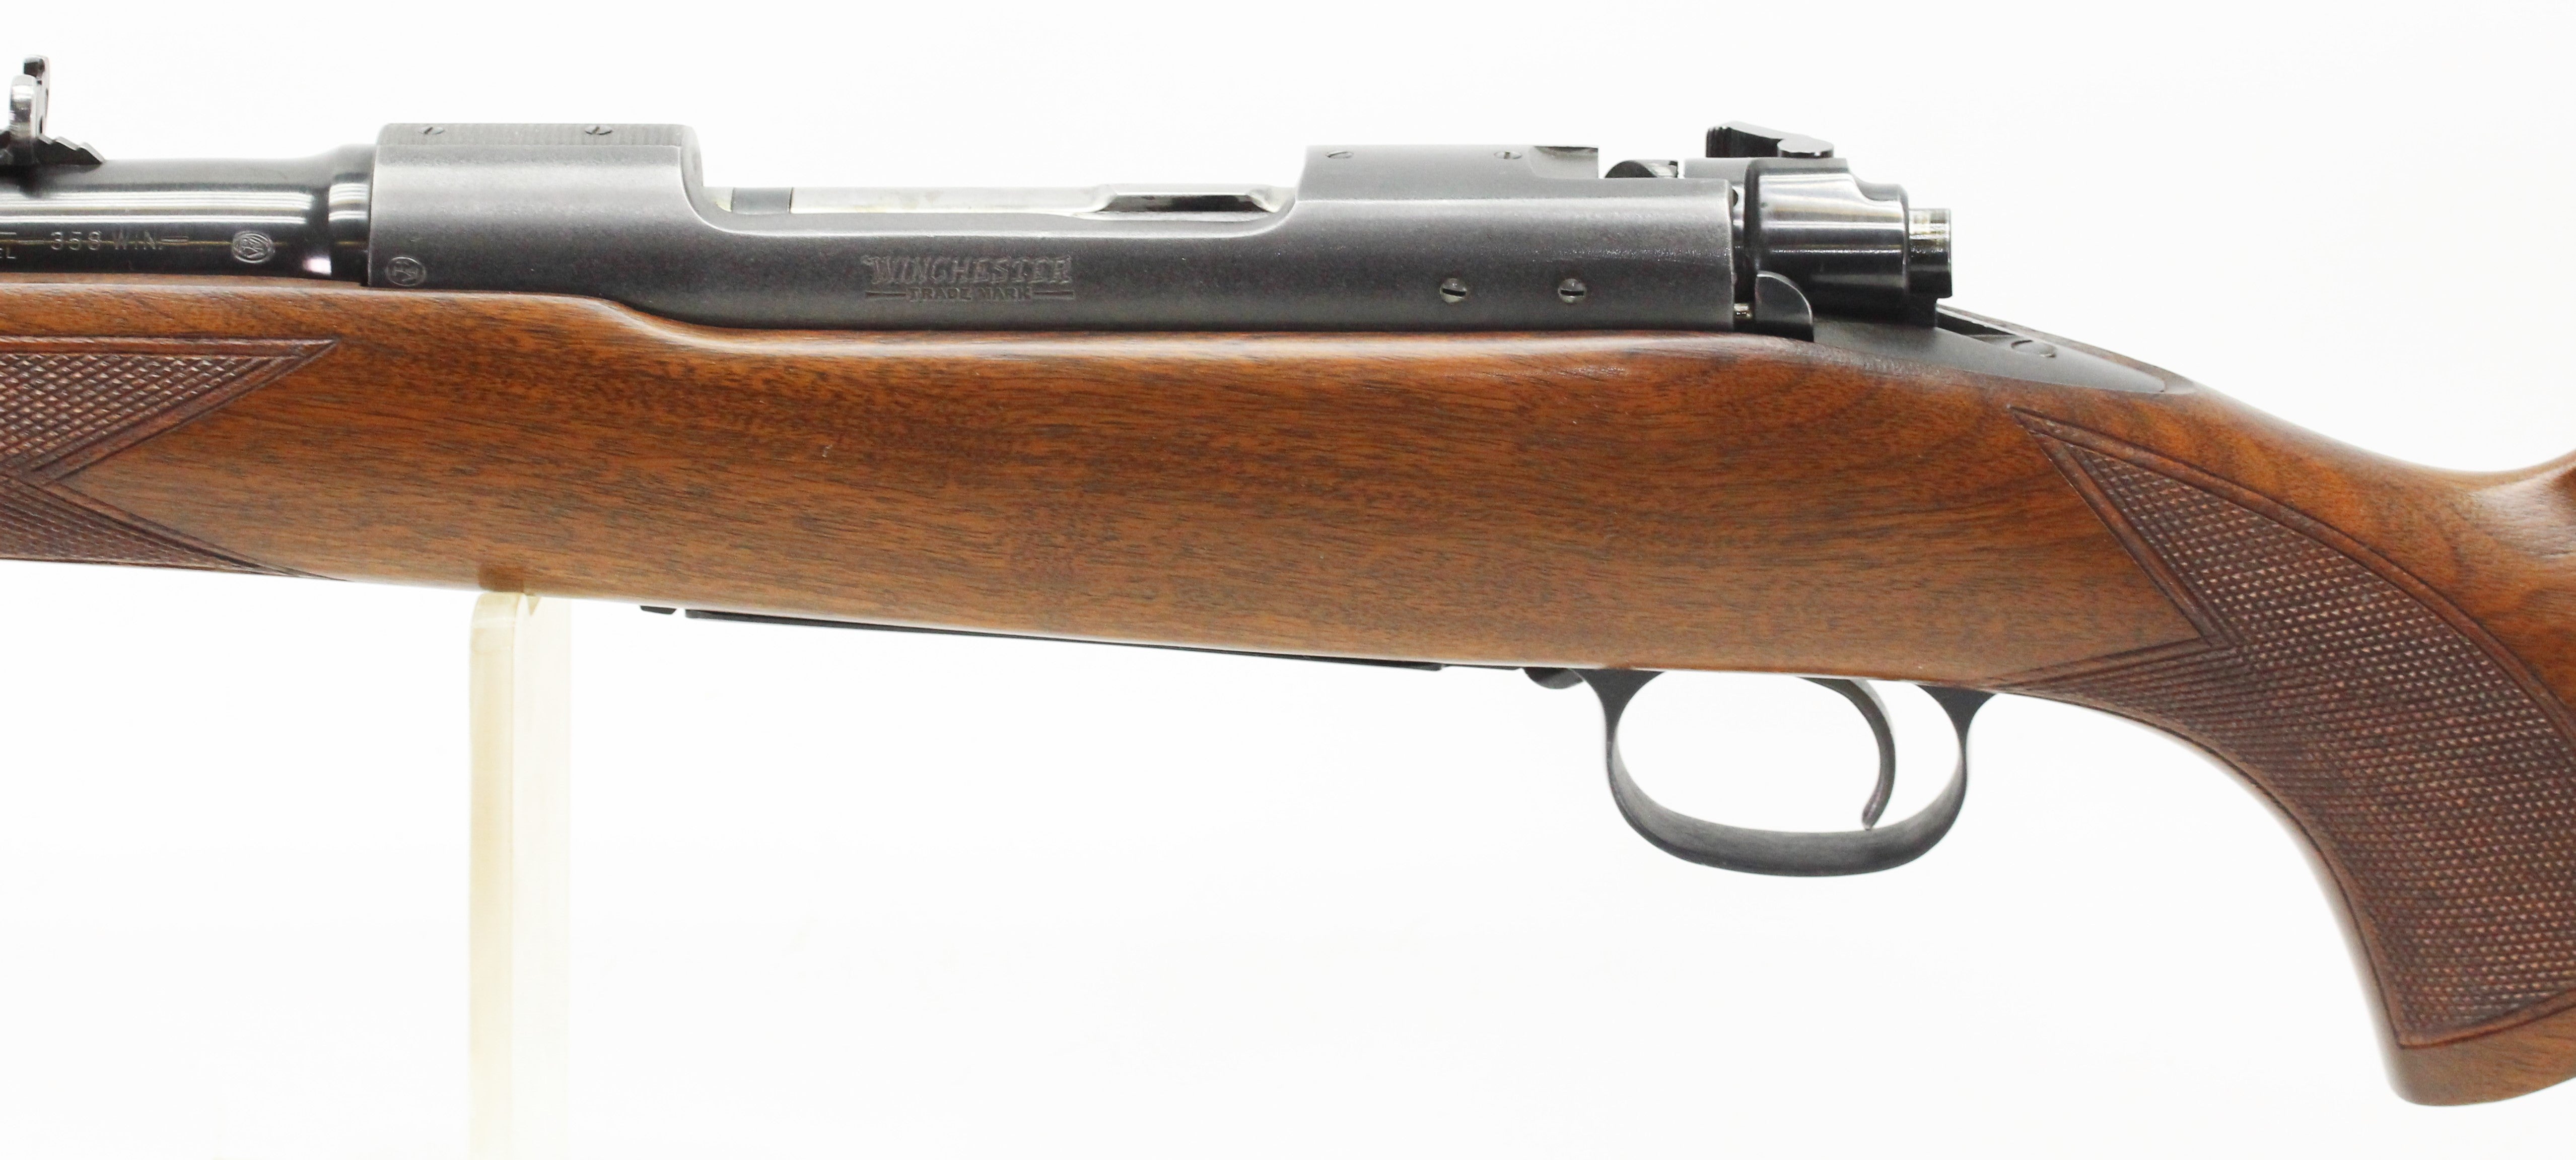 .358 Win Featherweight Rifle - 1955